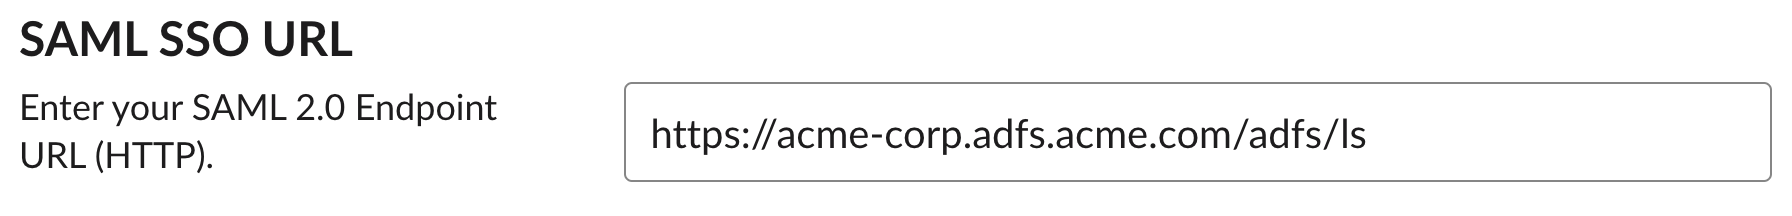 SAML SSO URL と、入力された URL が表示されたテキストボックス